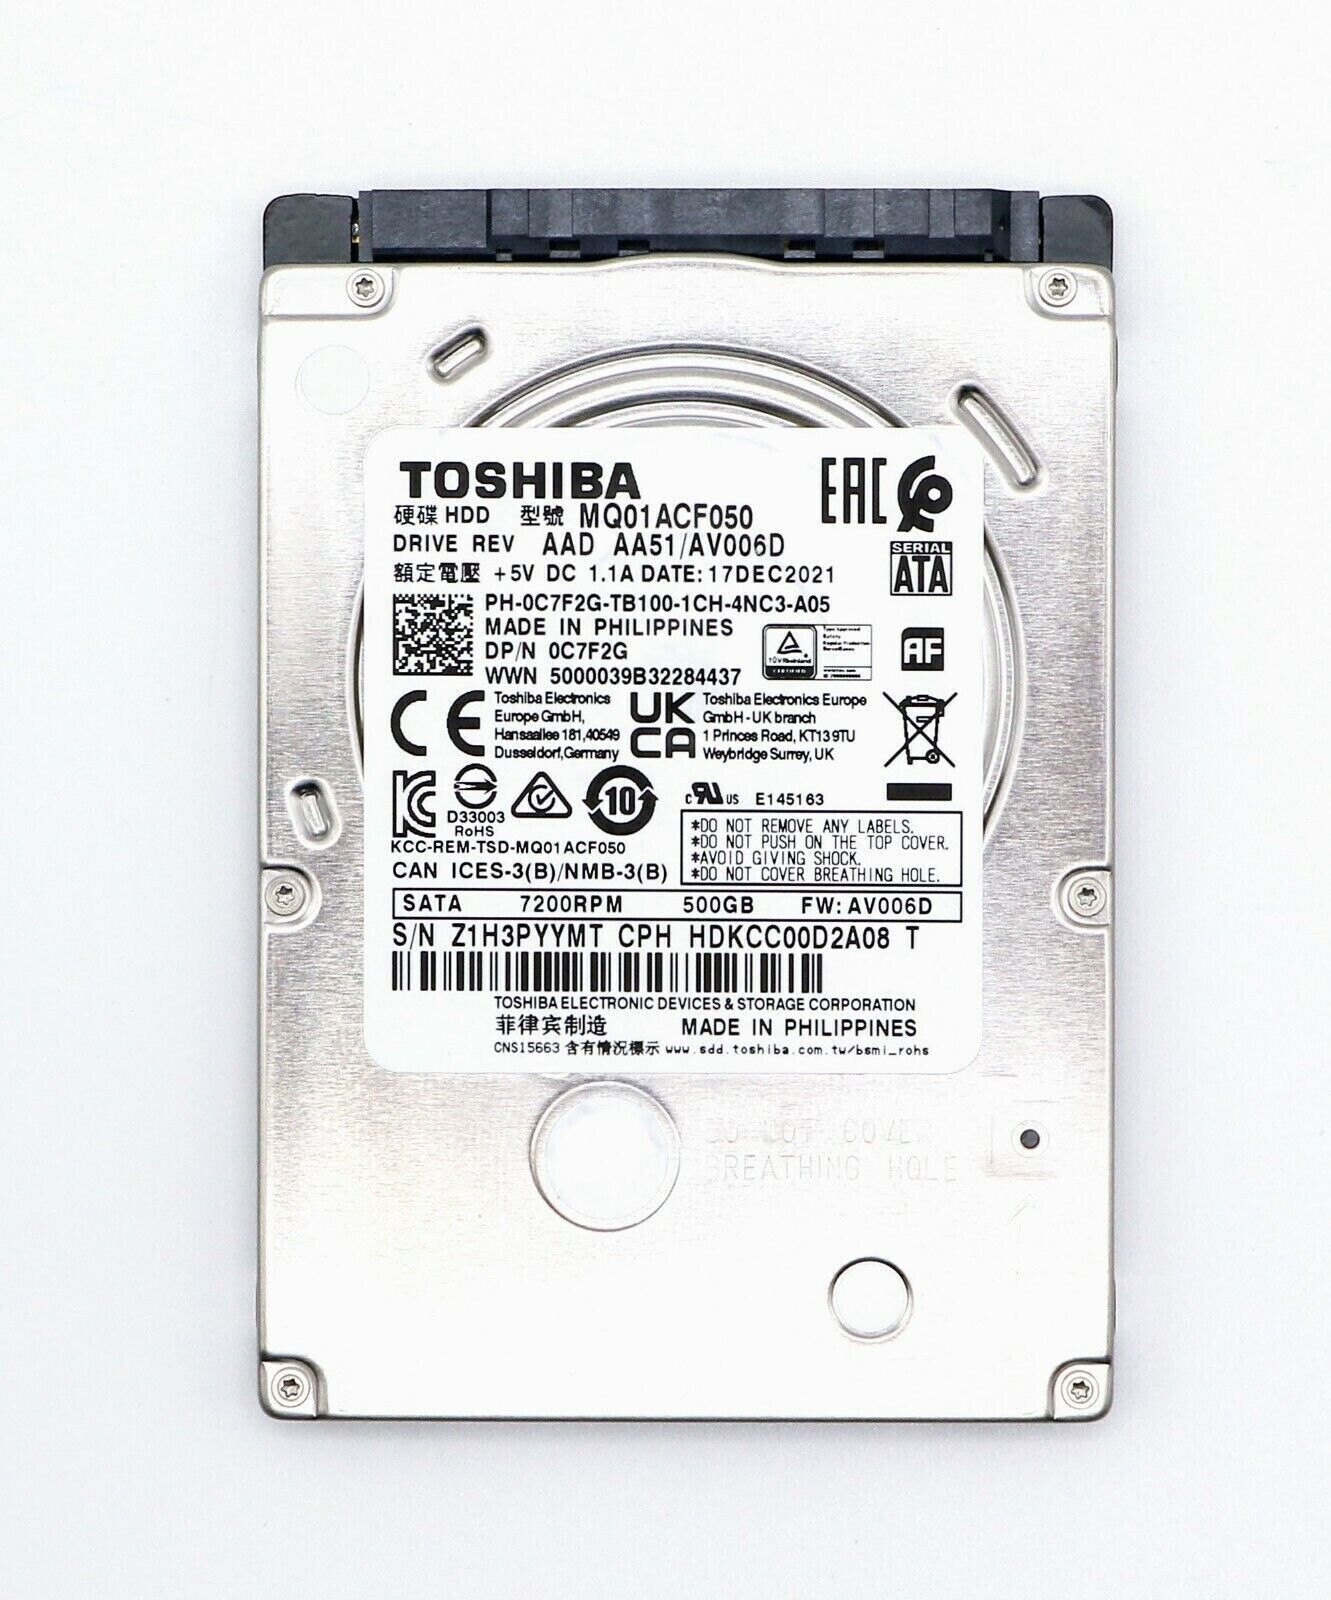 Toshiba 500GB 7200 RPM HDD 2.5 in SATA III MQ01ACF050  Hard Drive